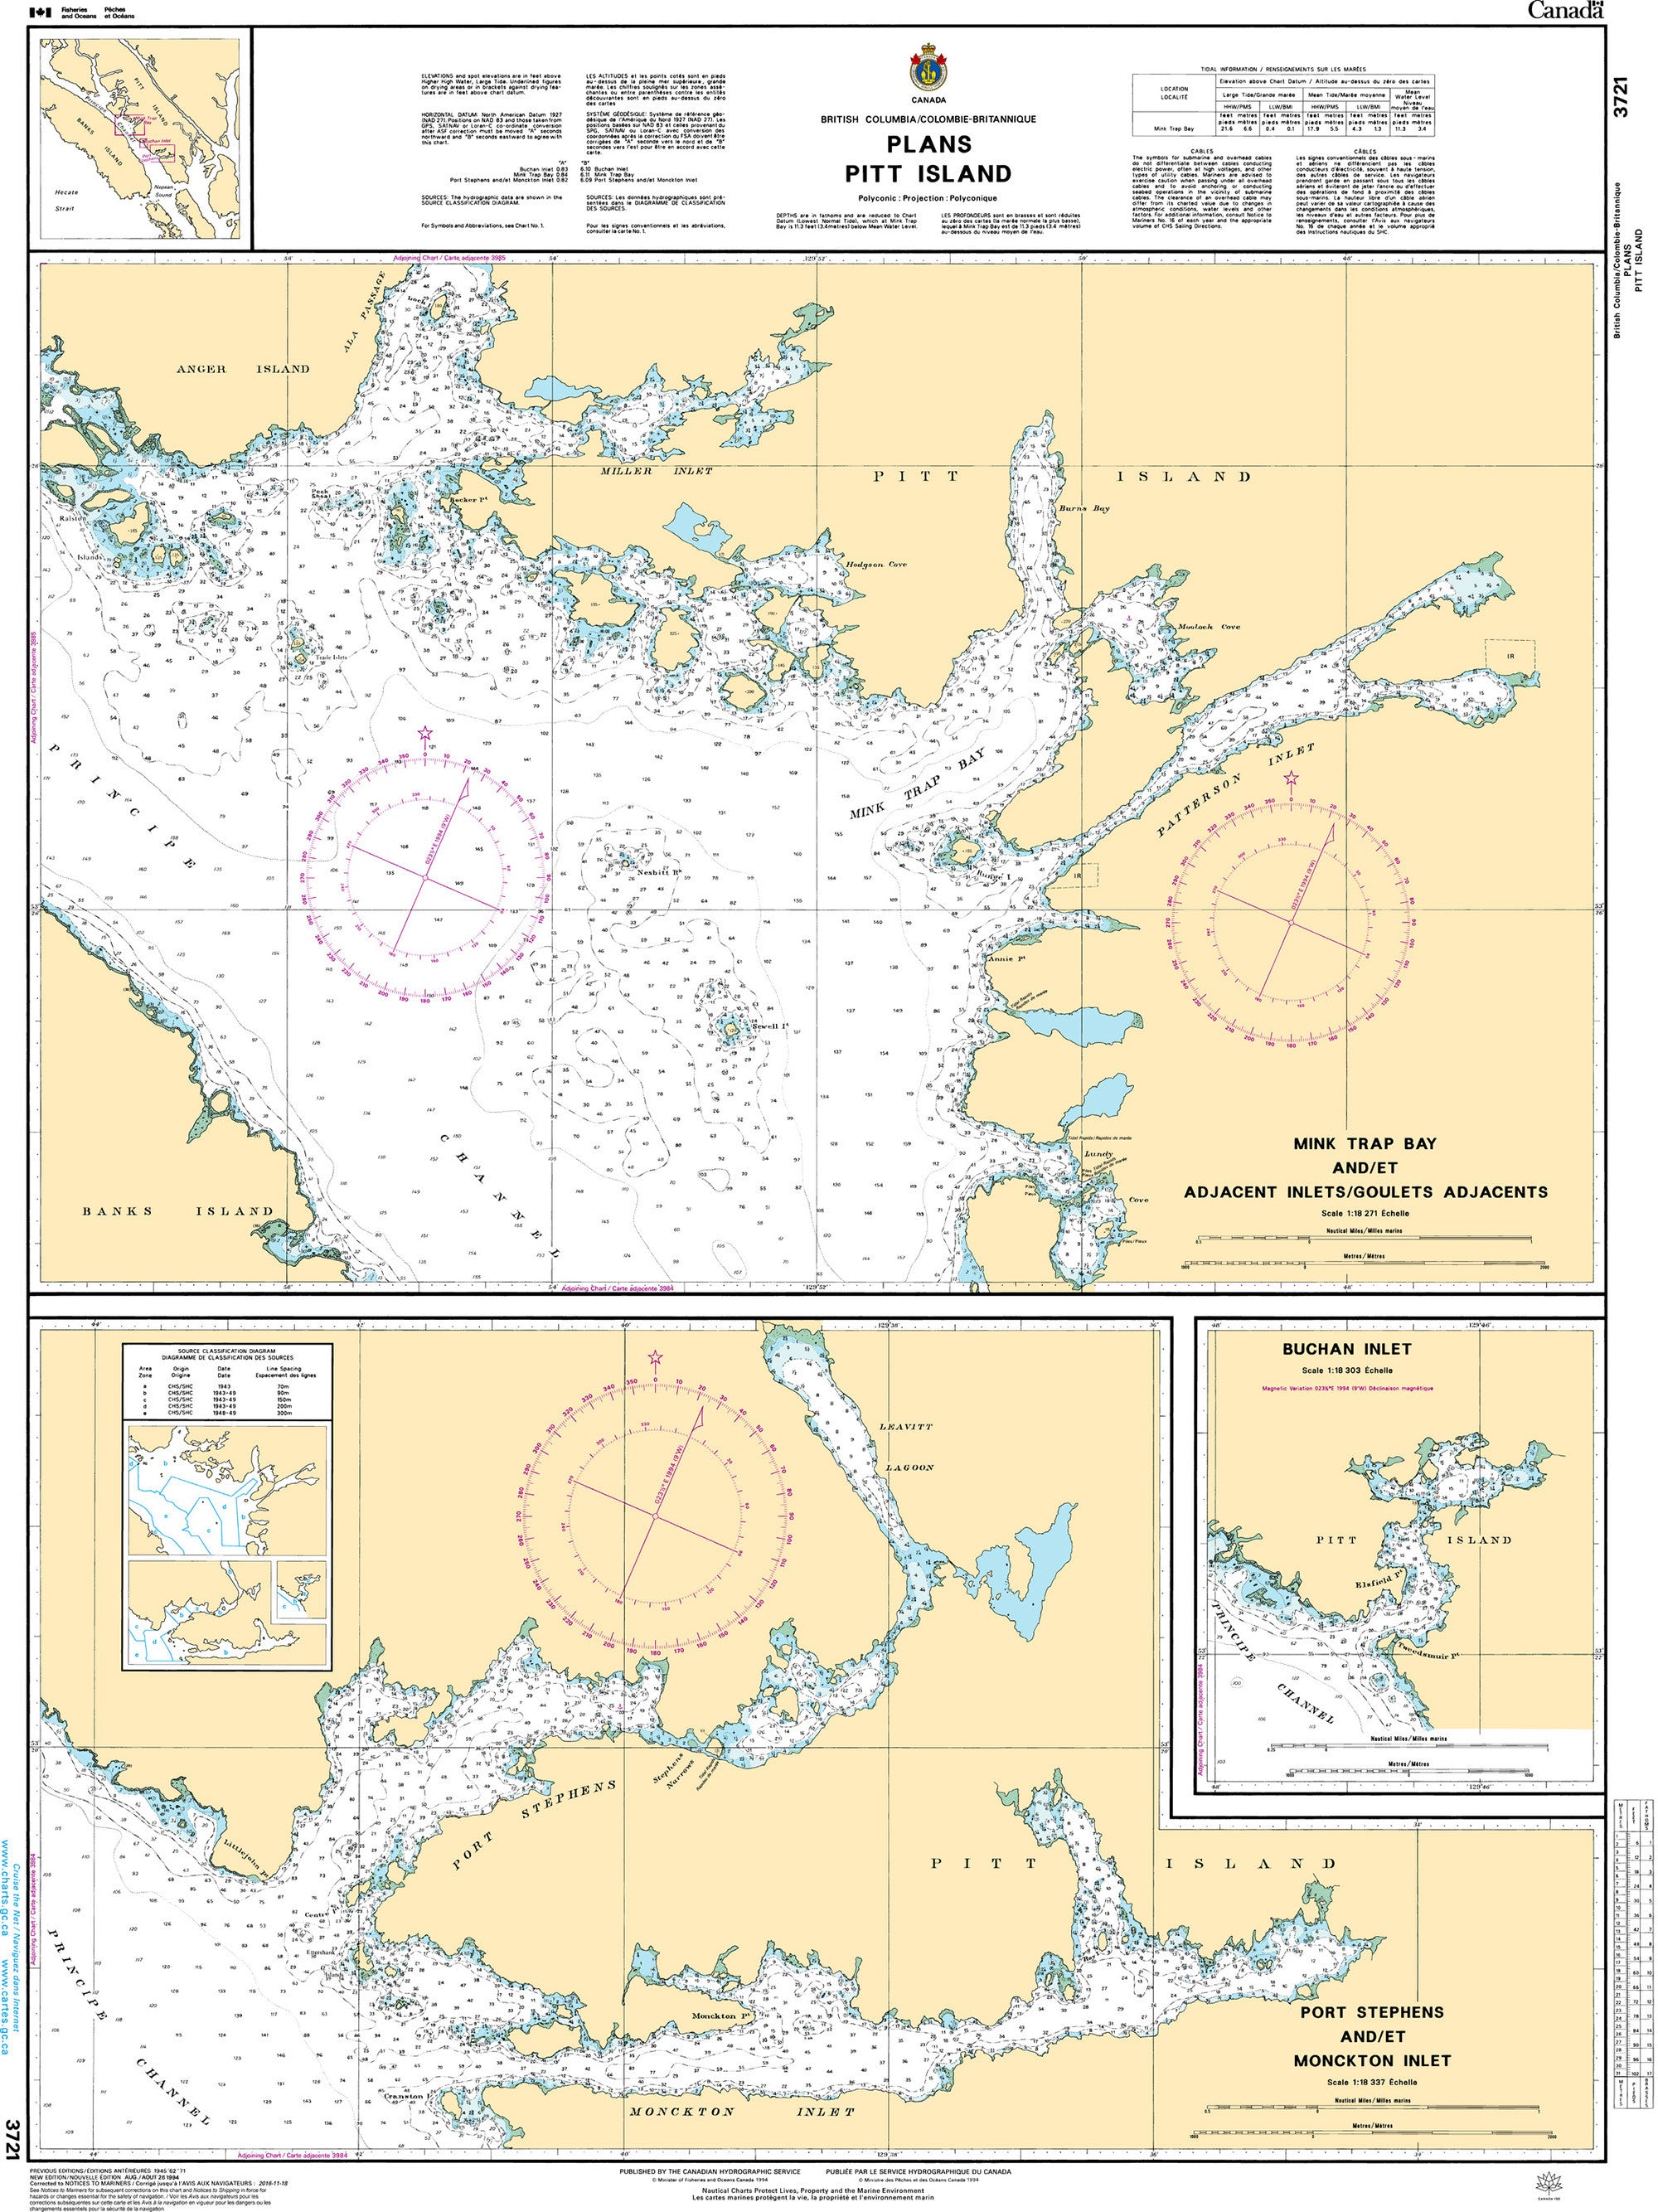 Canadian Hydrographic Service Nautical Chart CHS3721: Plans Pitt Island